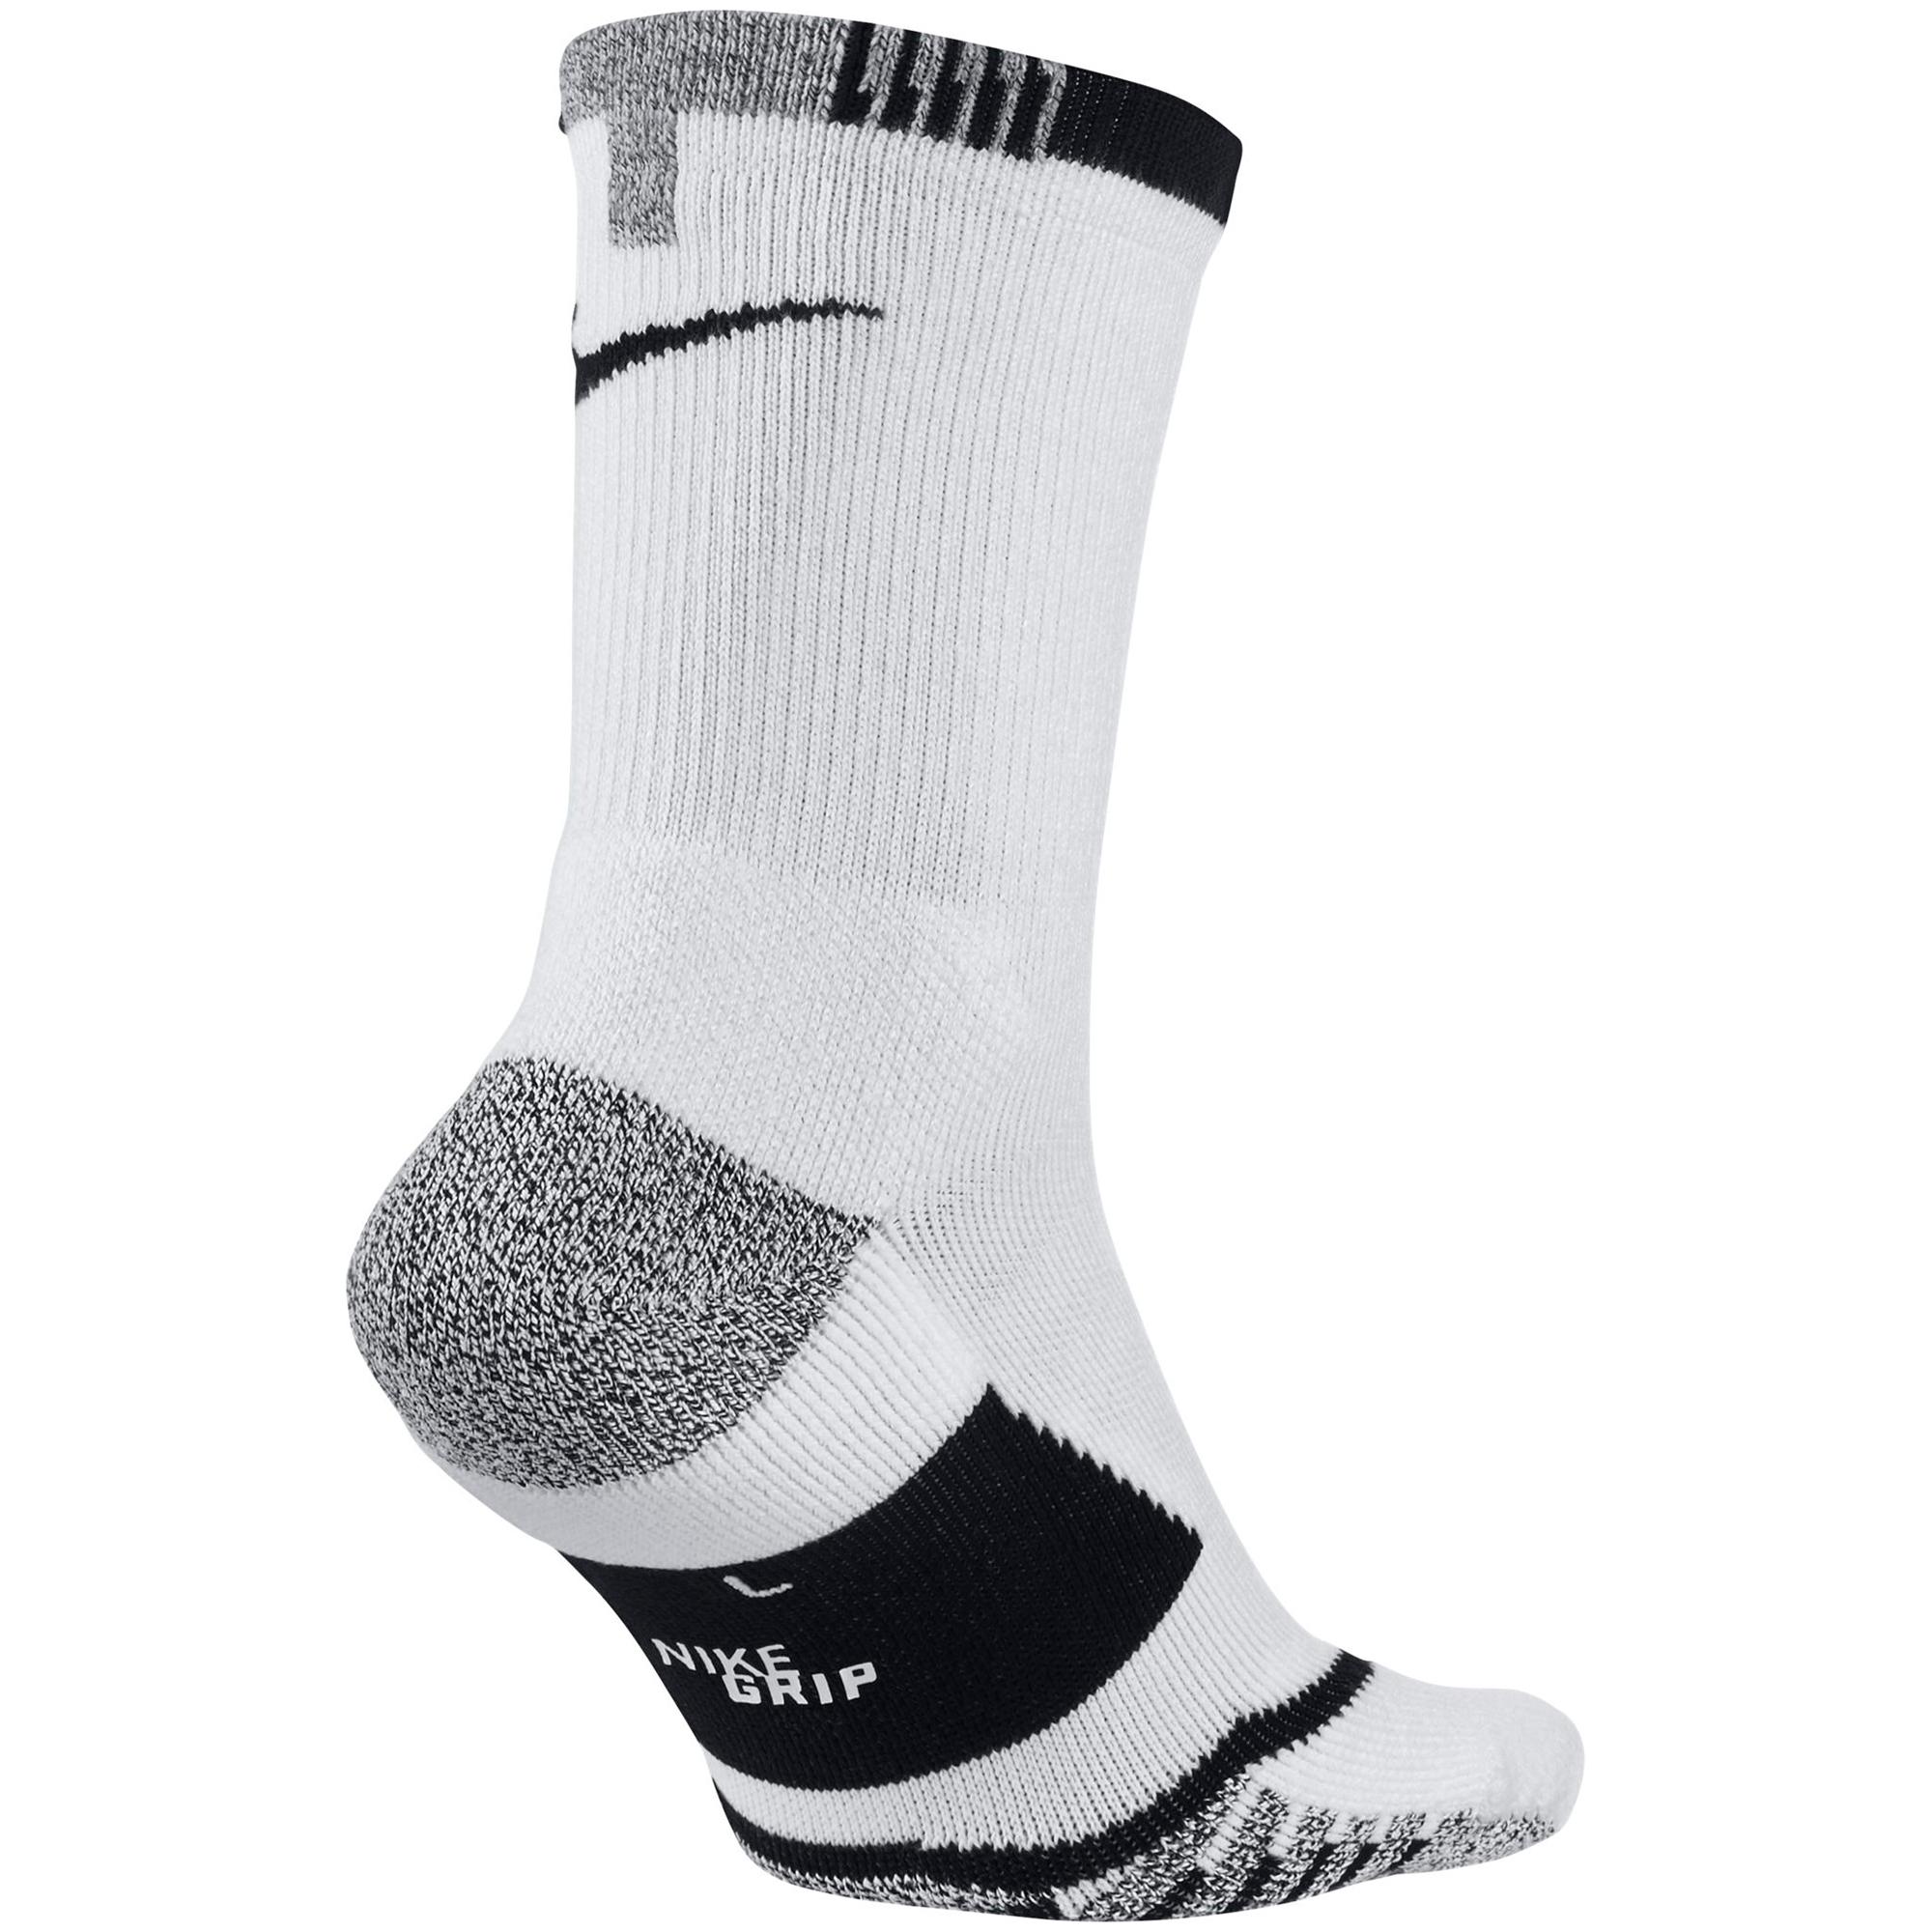 Nike Grip Elite Crew Tennis Socks (1 Pair) - White/Black - Tennisnuts.com